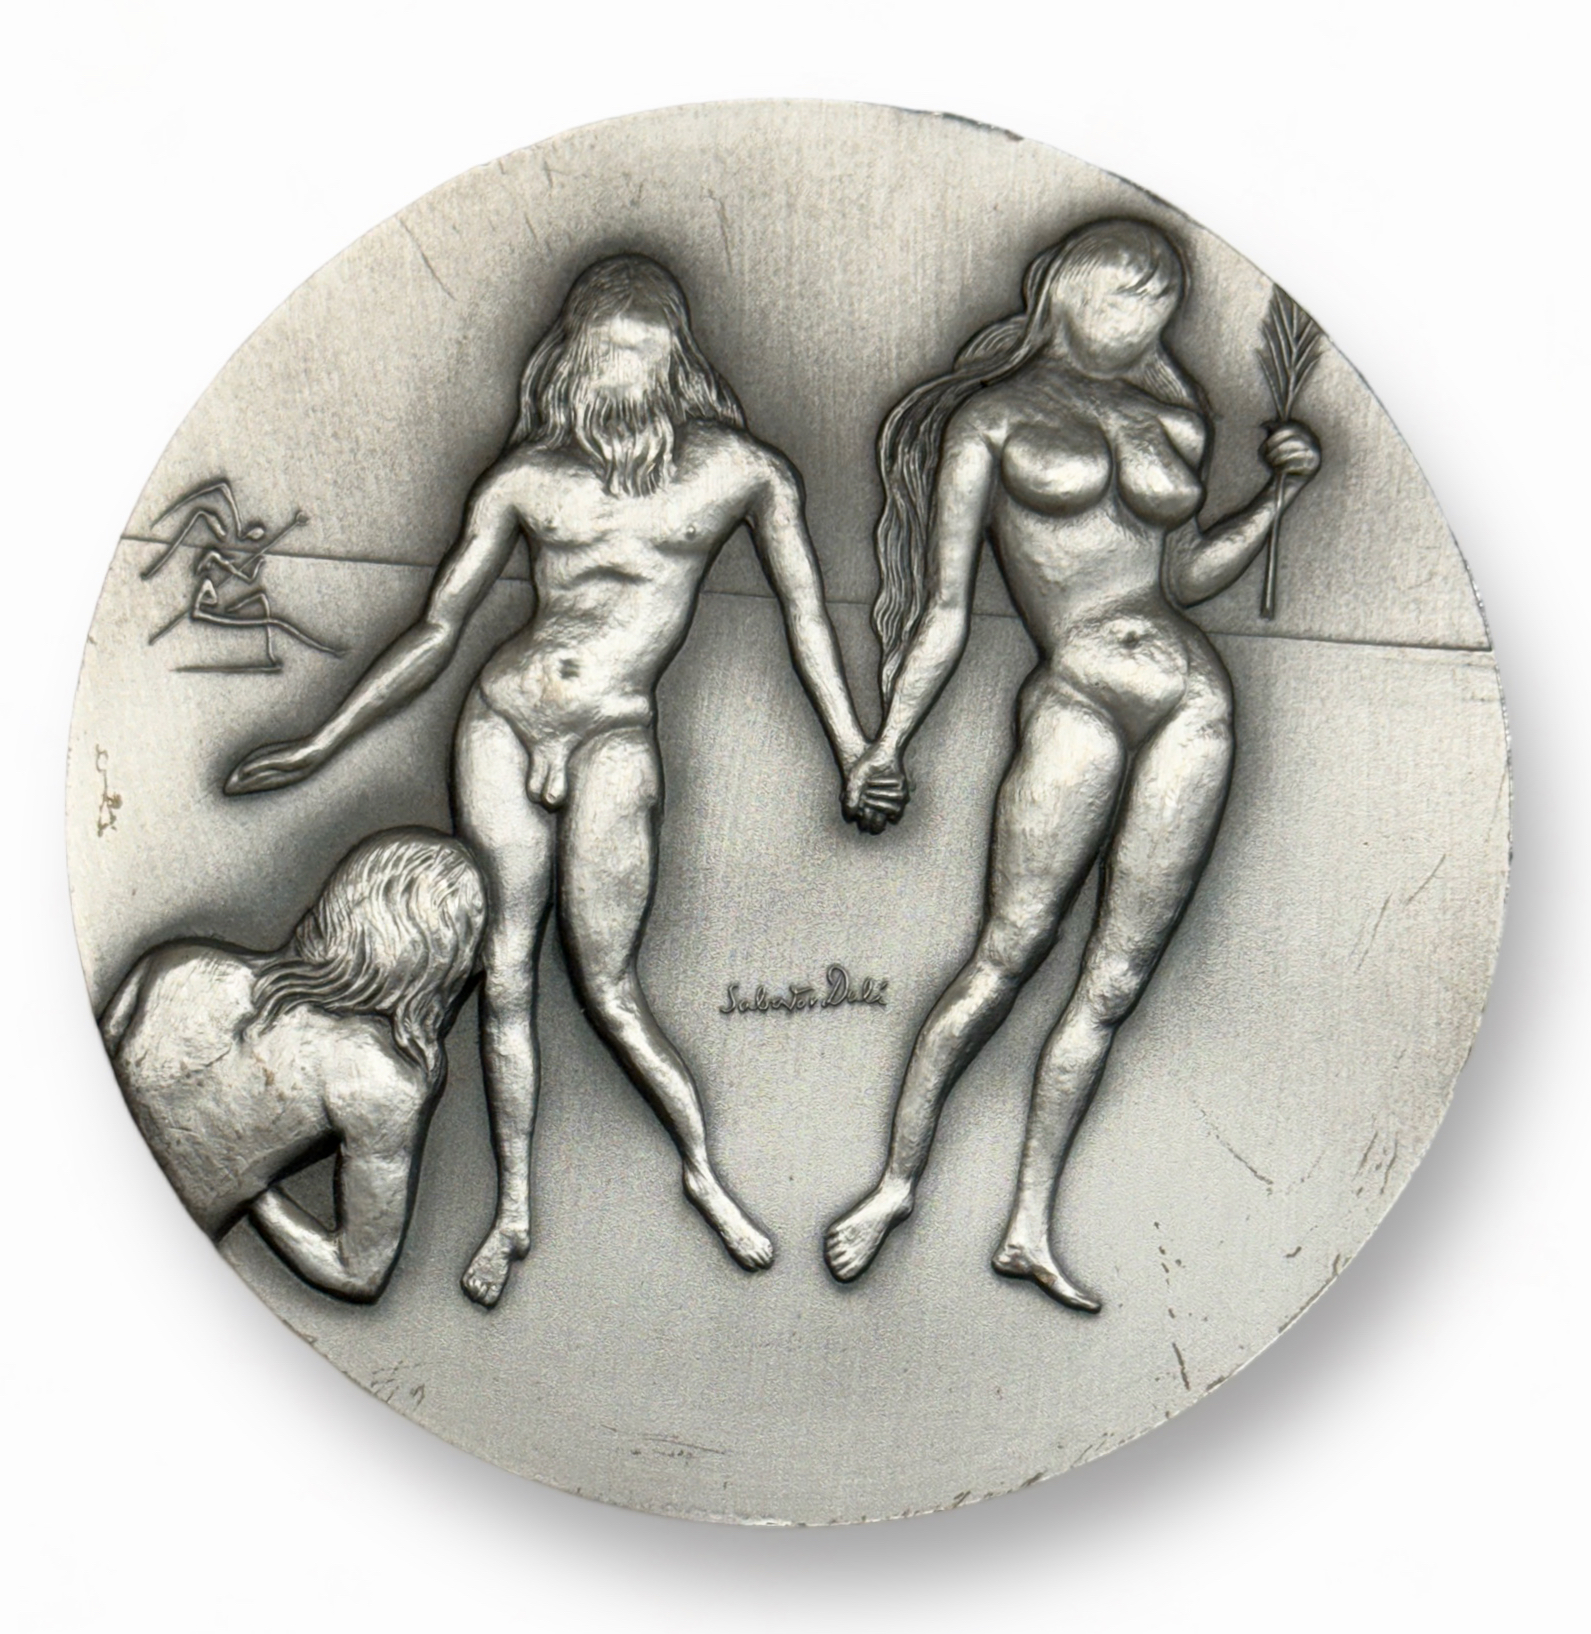 Dali, Ten Commandments Commemorative Coin